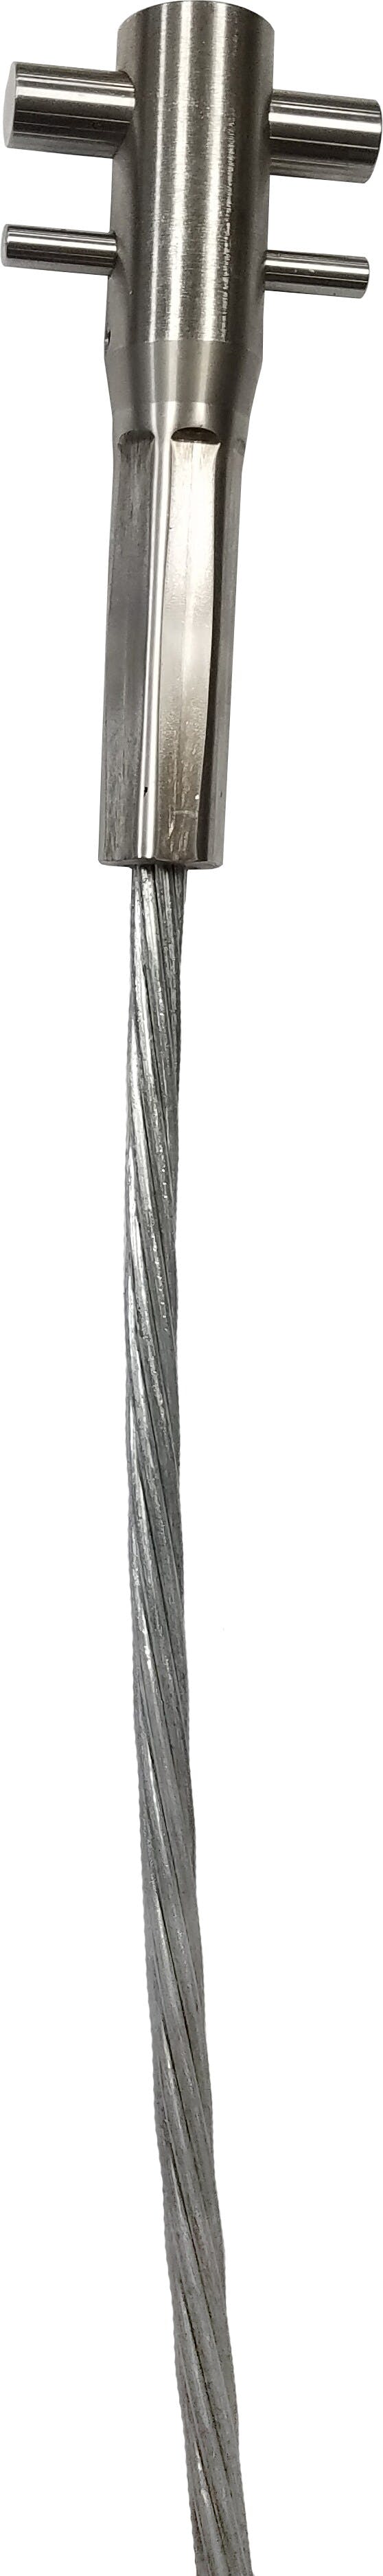 3M™ DBI-SALA® Lad-Saf™ Swaged Cable 6115007, 3/8 Inch, Galvanized Steel, 30 m_0